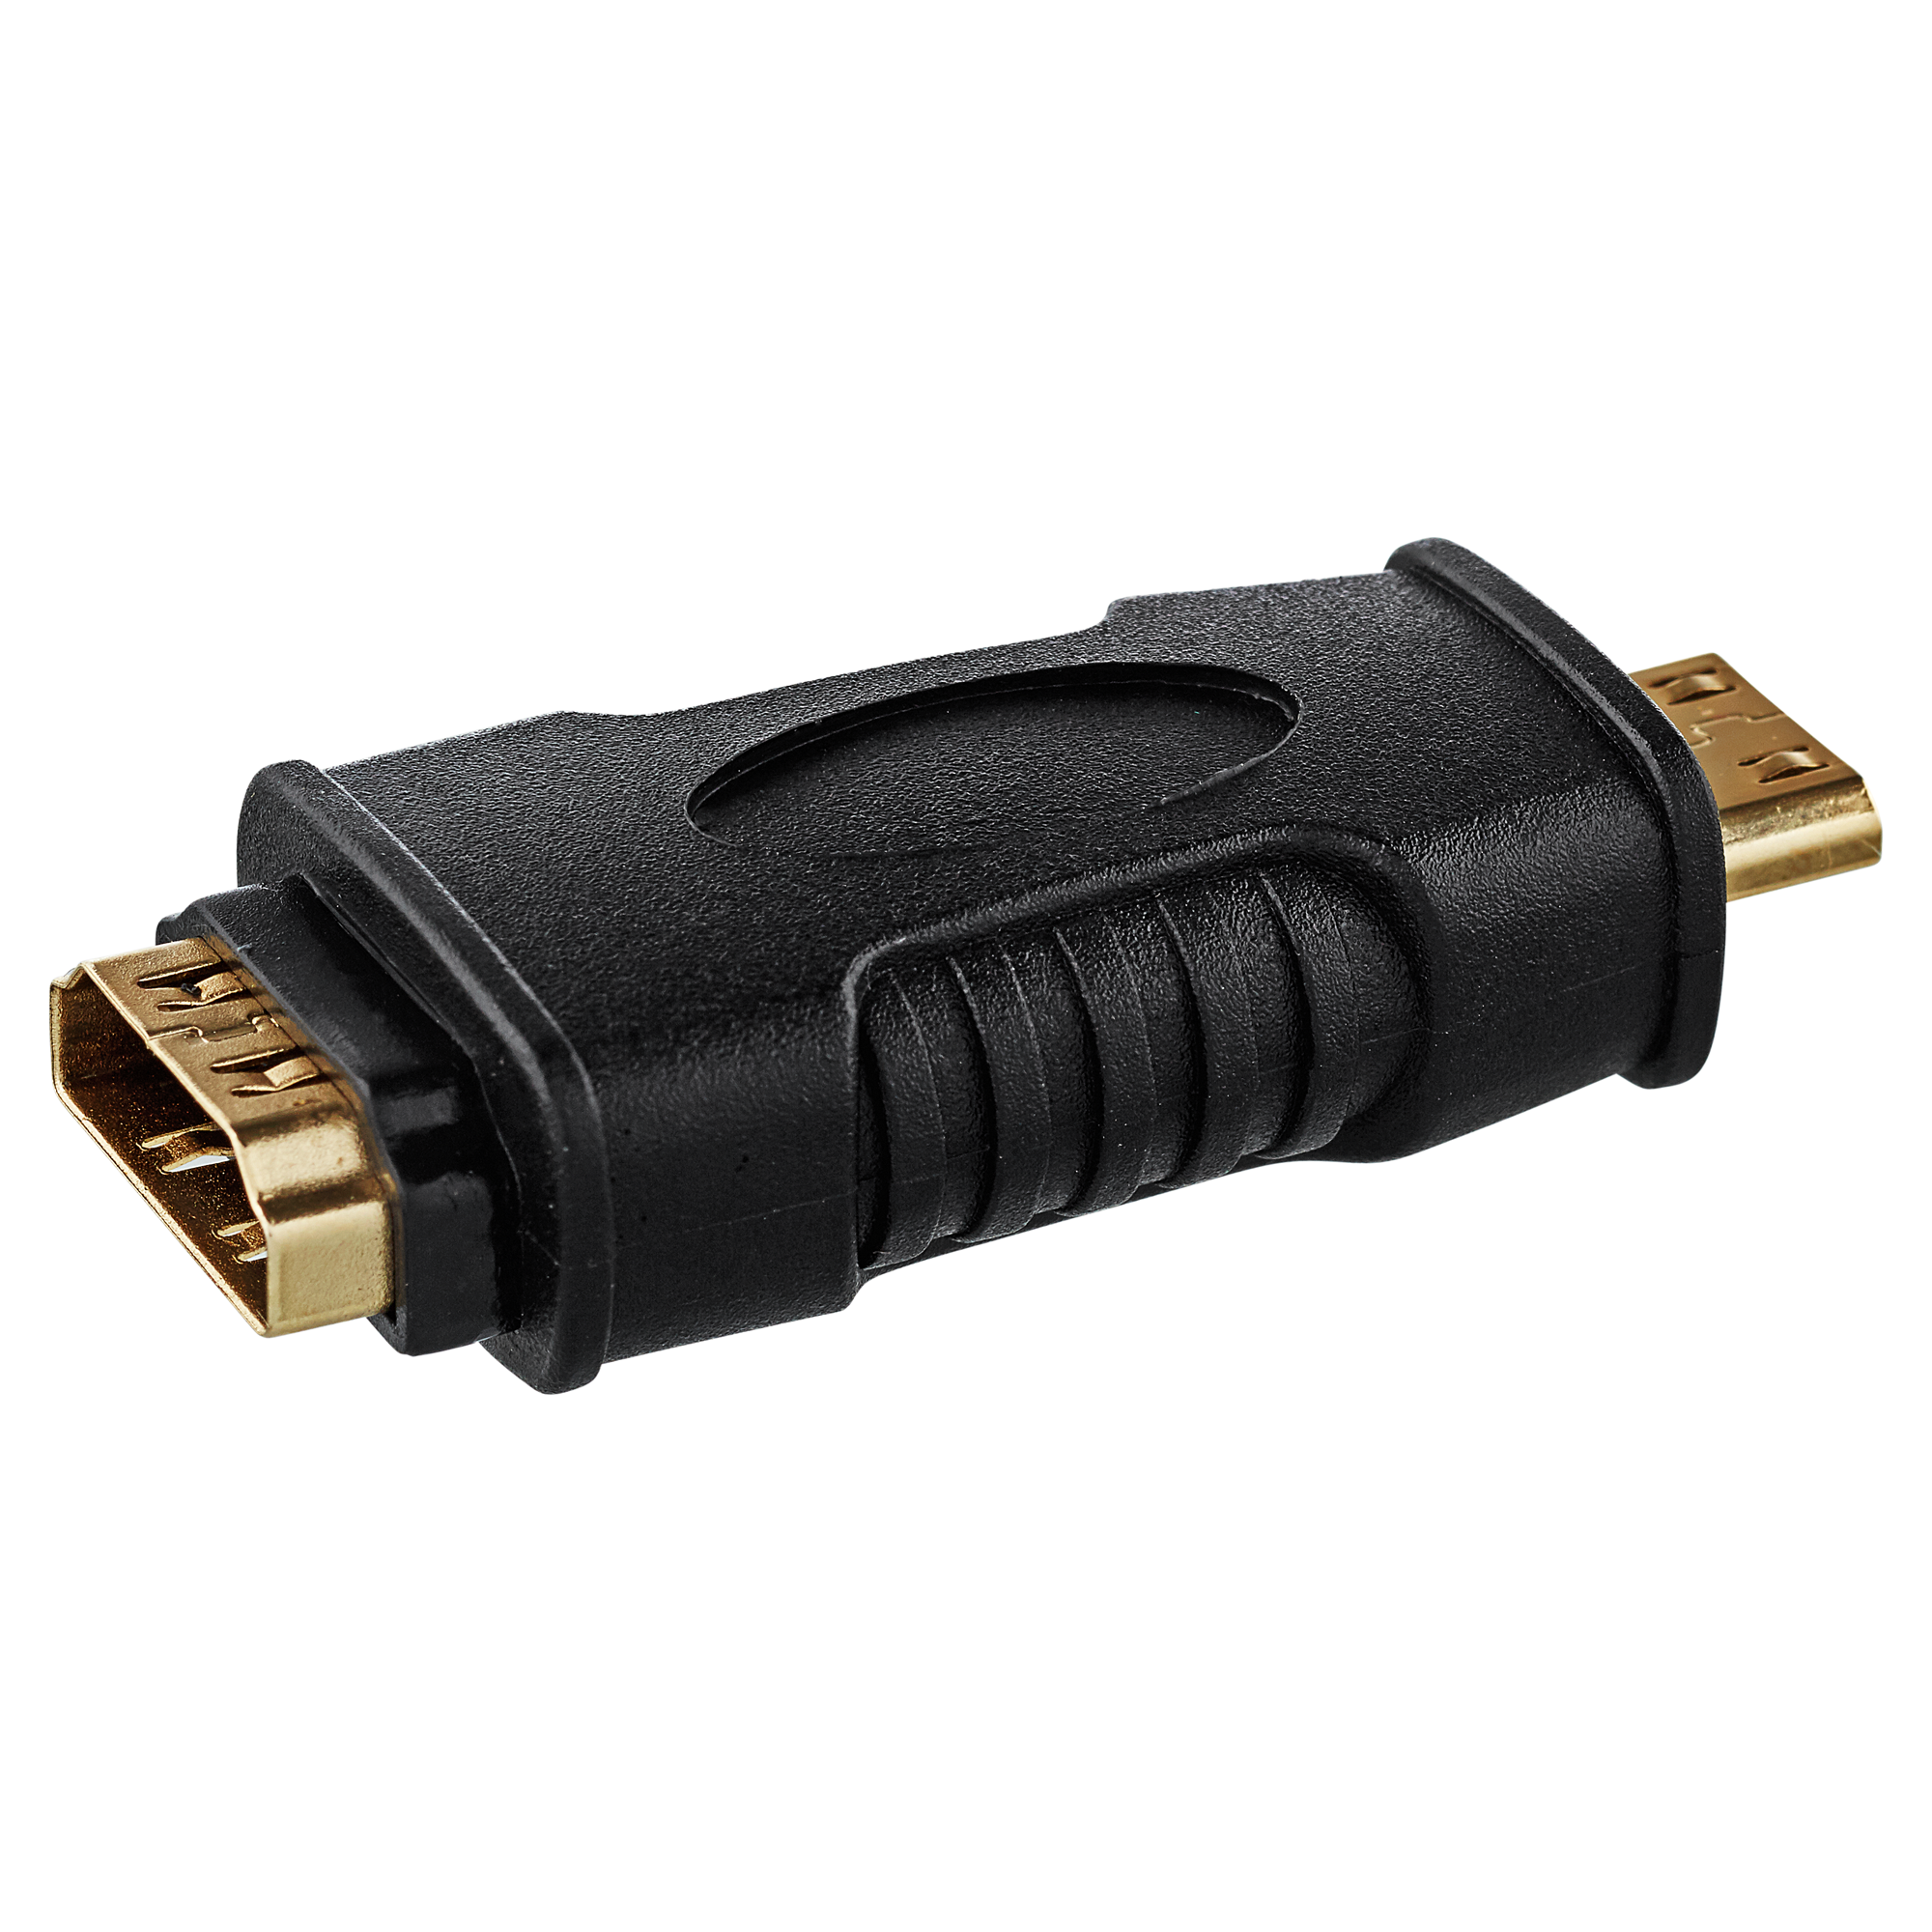 Mini-HDMI-/HDMI-Adapter Professional schwarz + product picture